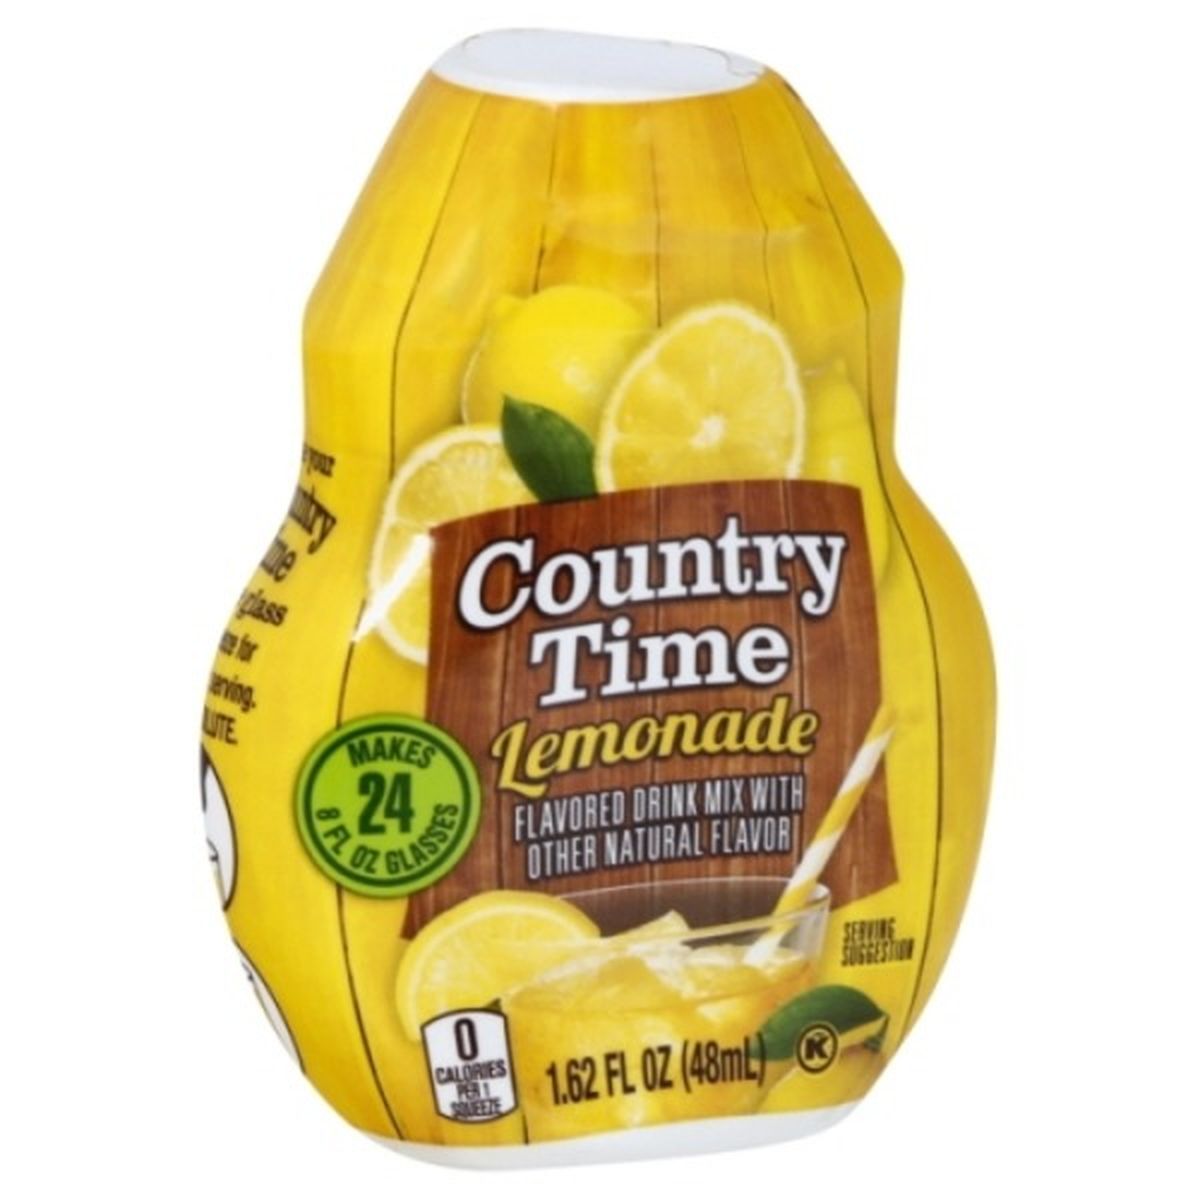 Calories in Country Time Lemonade